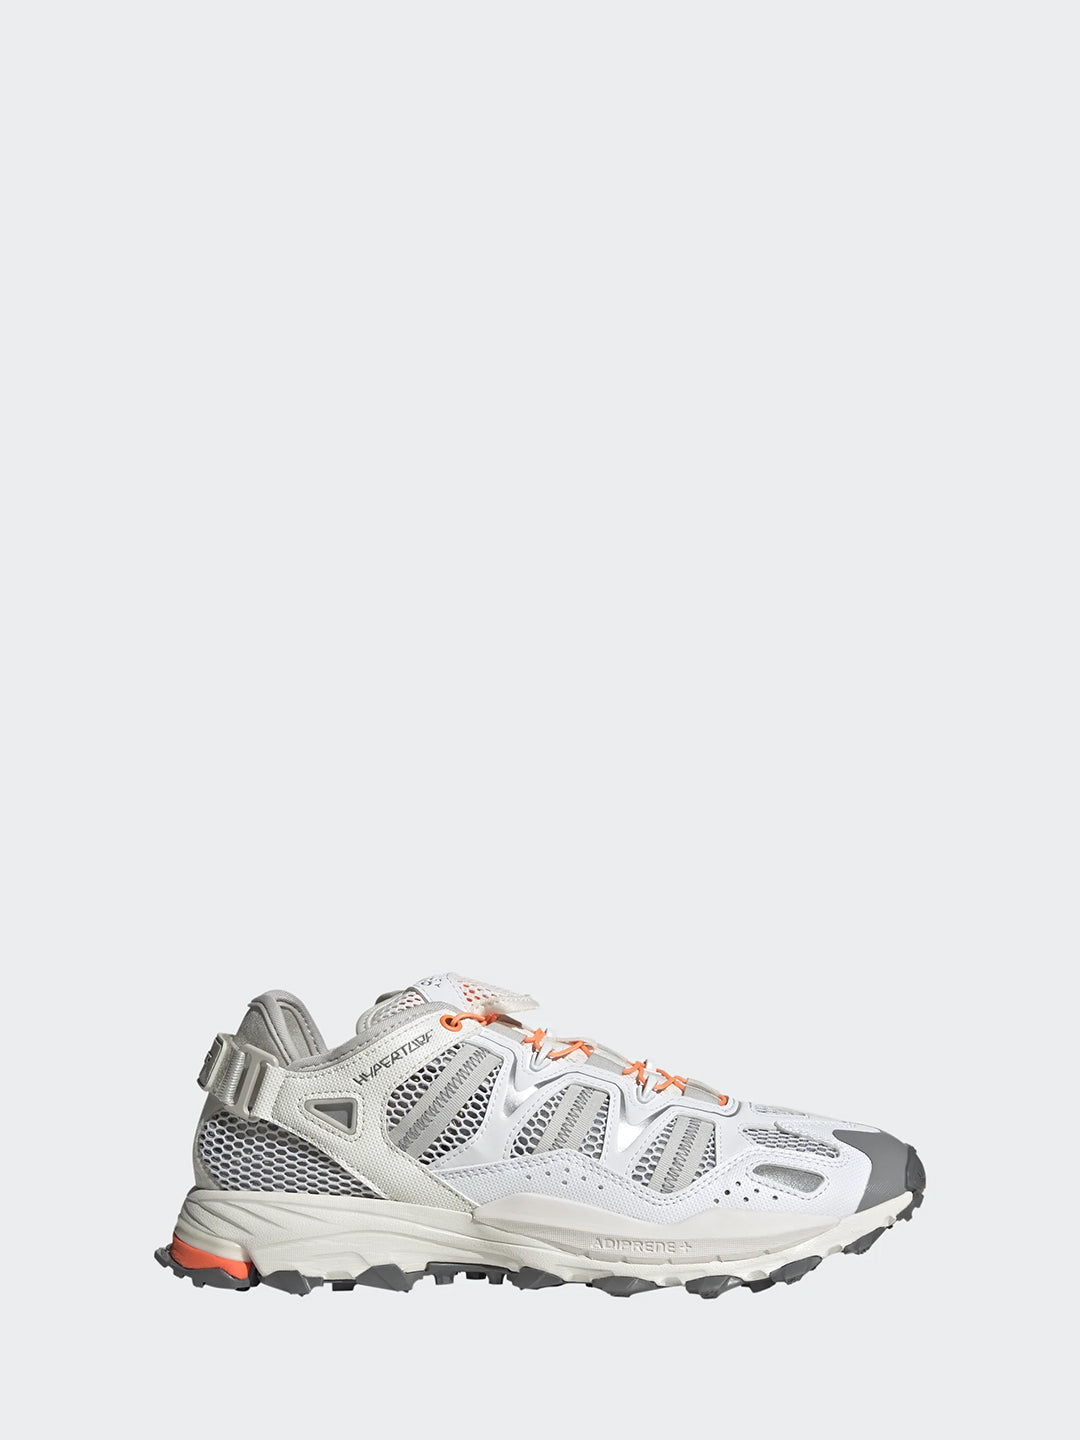 Adidas Hyperturf sneakers bianco, grigio e arancione